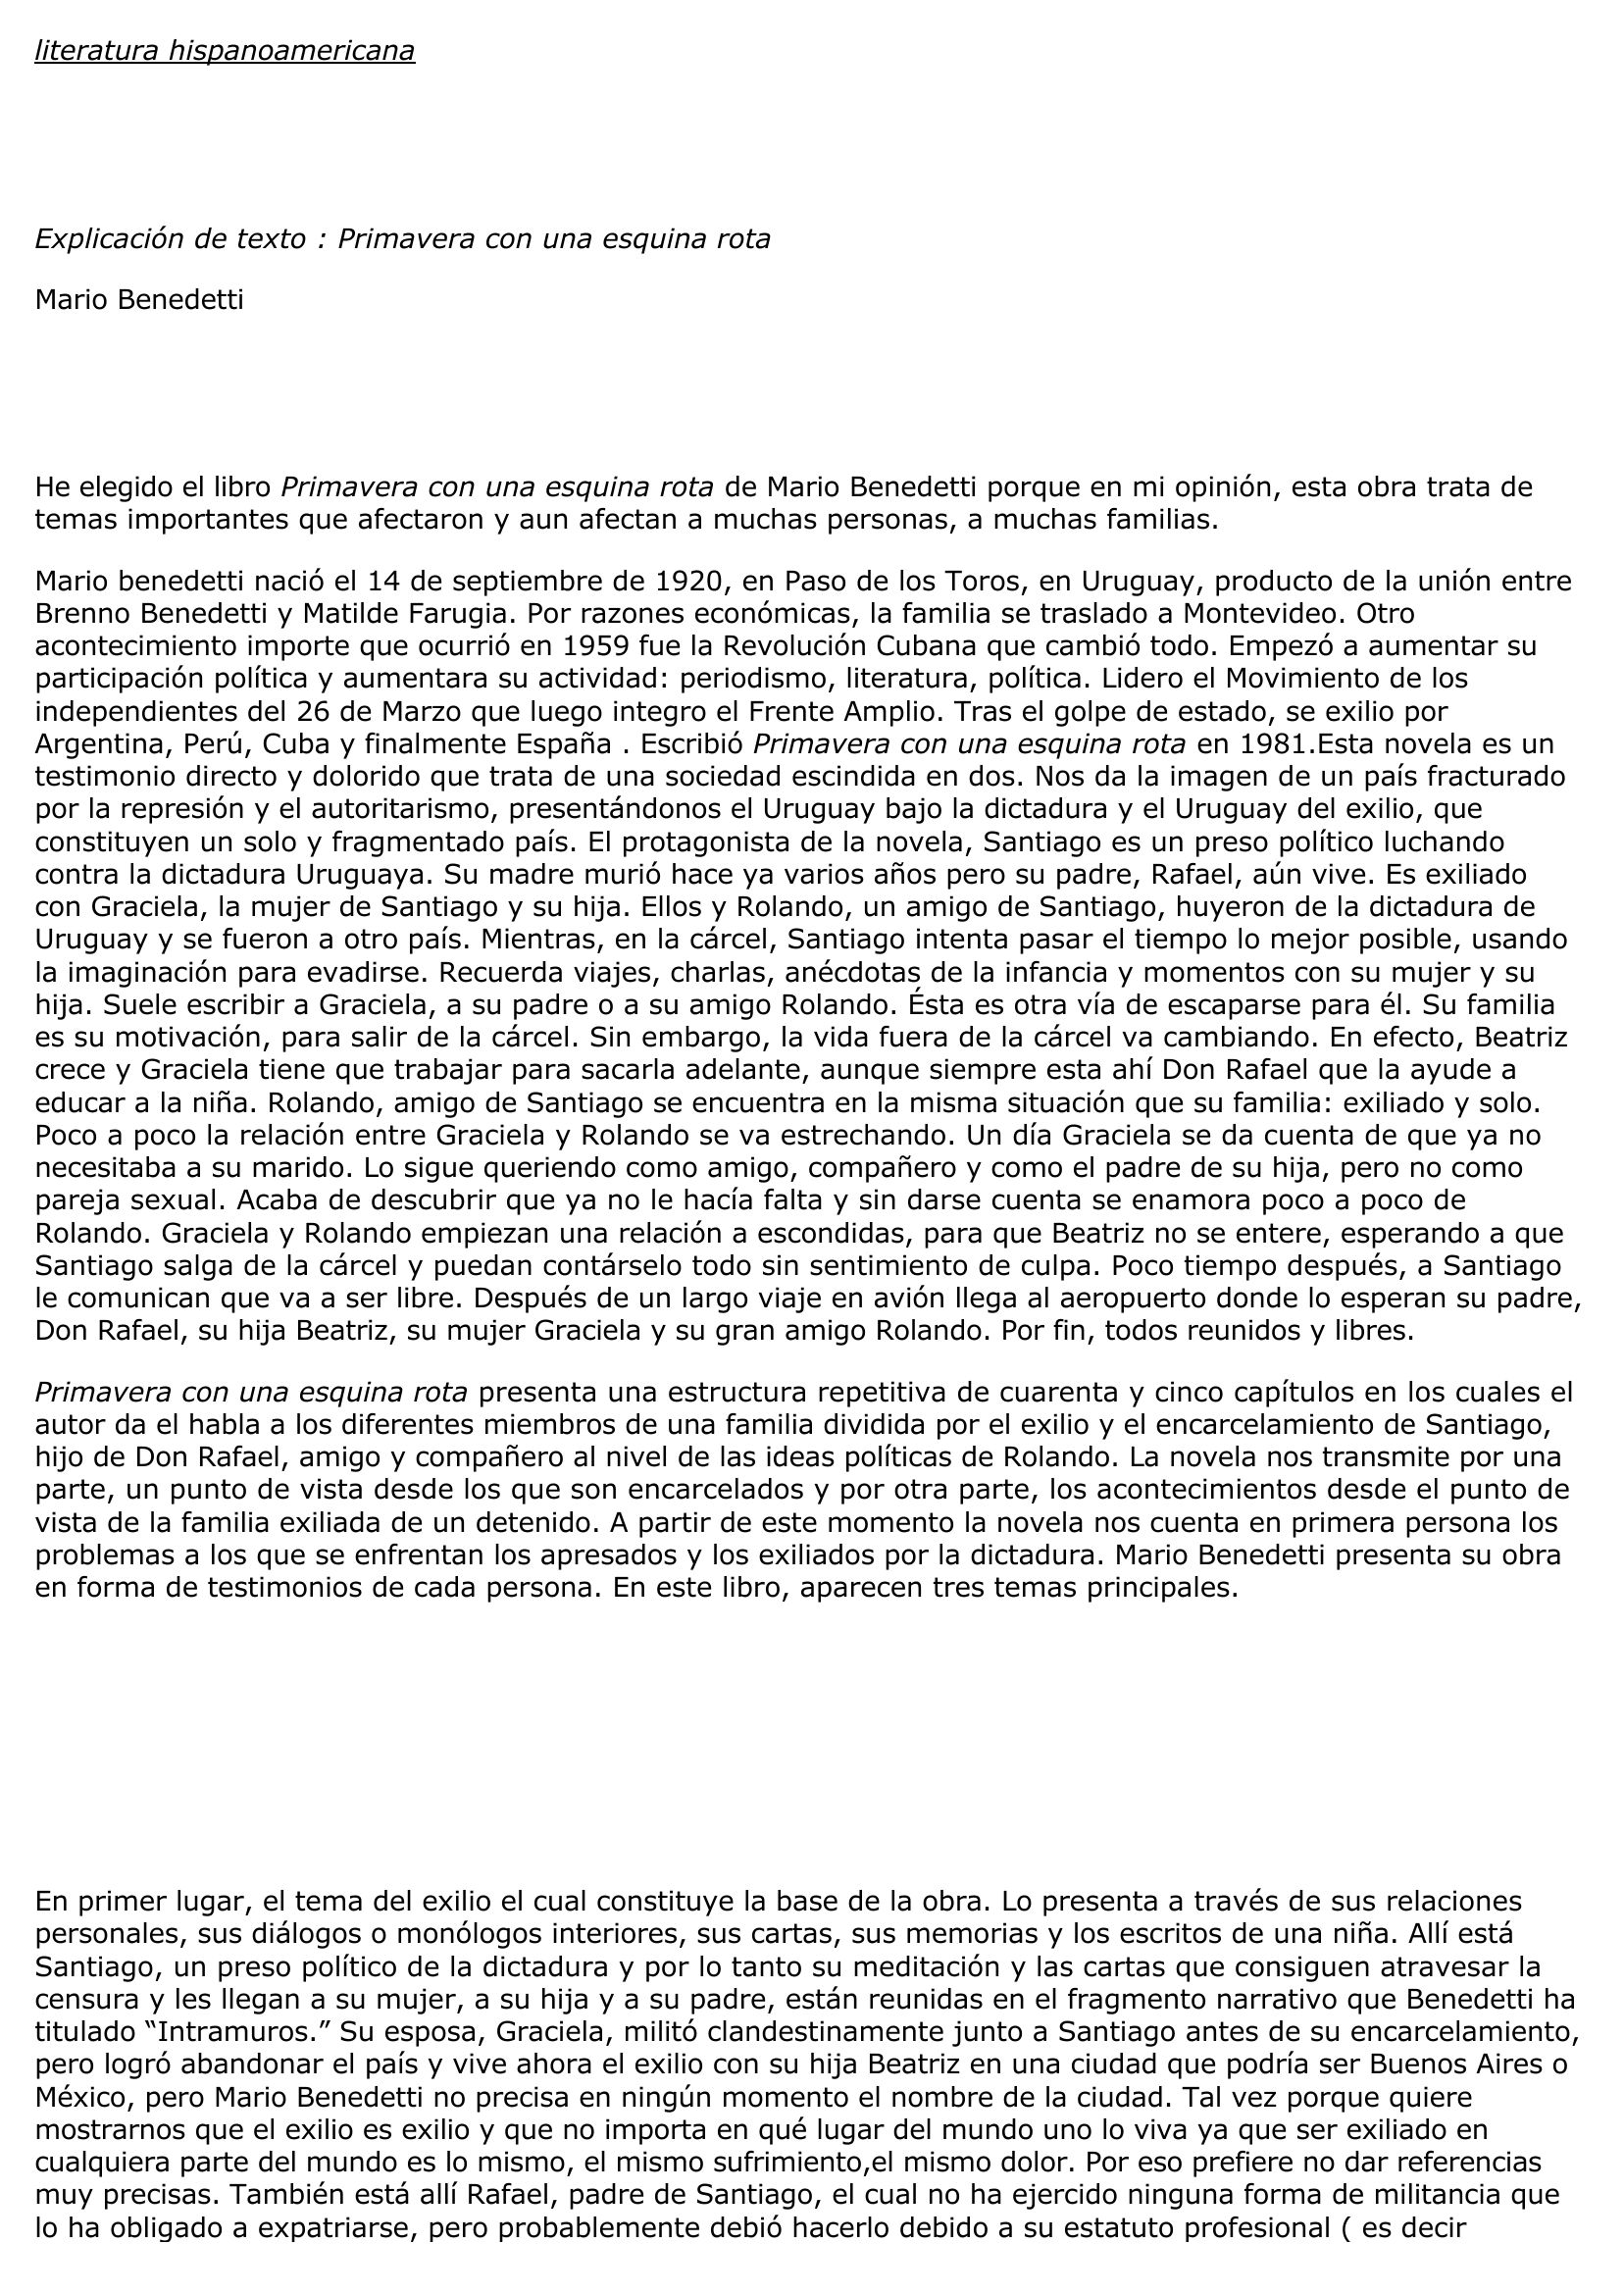 Prévisualisation du document EXPLCATION DE TEXTE PRIMAVERA CON UNA ESQUINA ROTA